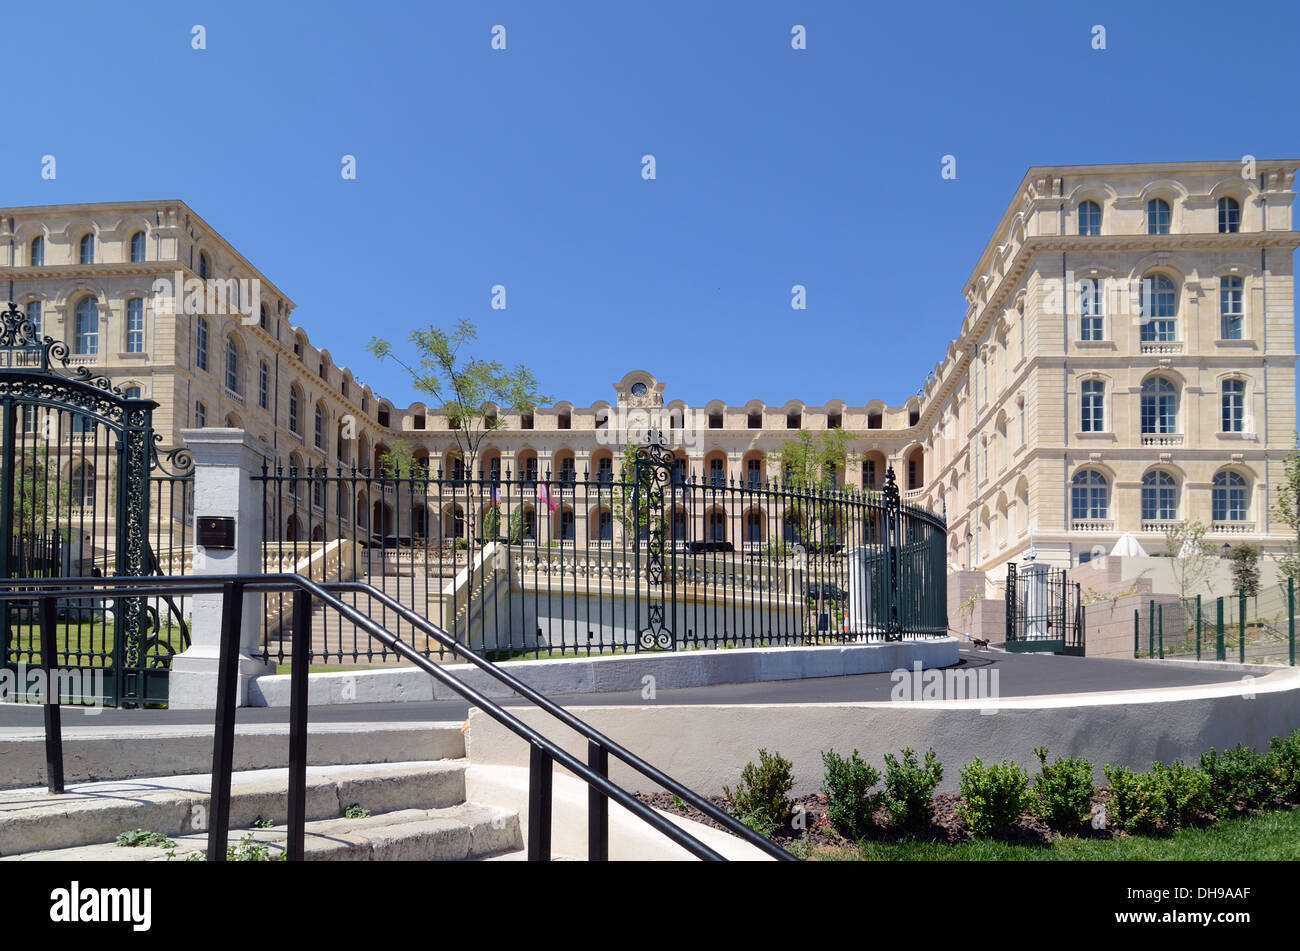 Hotel Dieu Intercontinental Hotel, Luxury Hotel or Five Star Hotel, Panier Marseille France Stock Photo